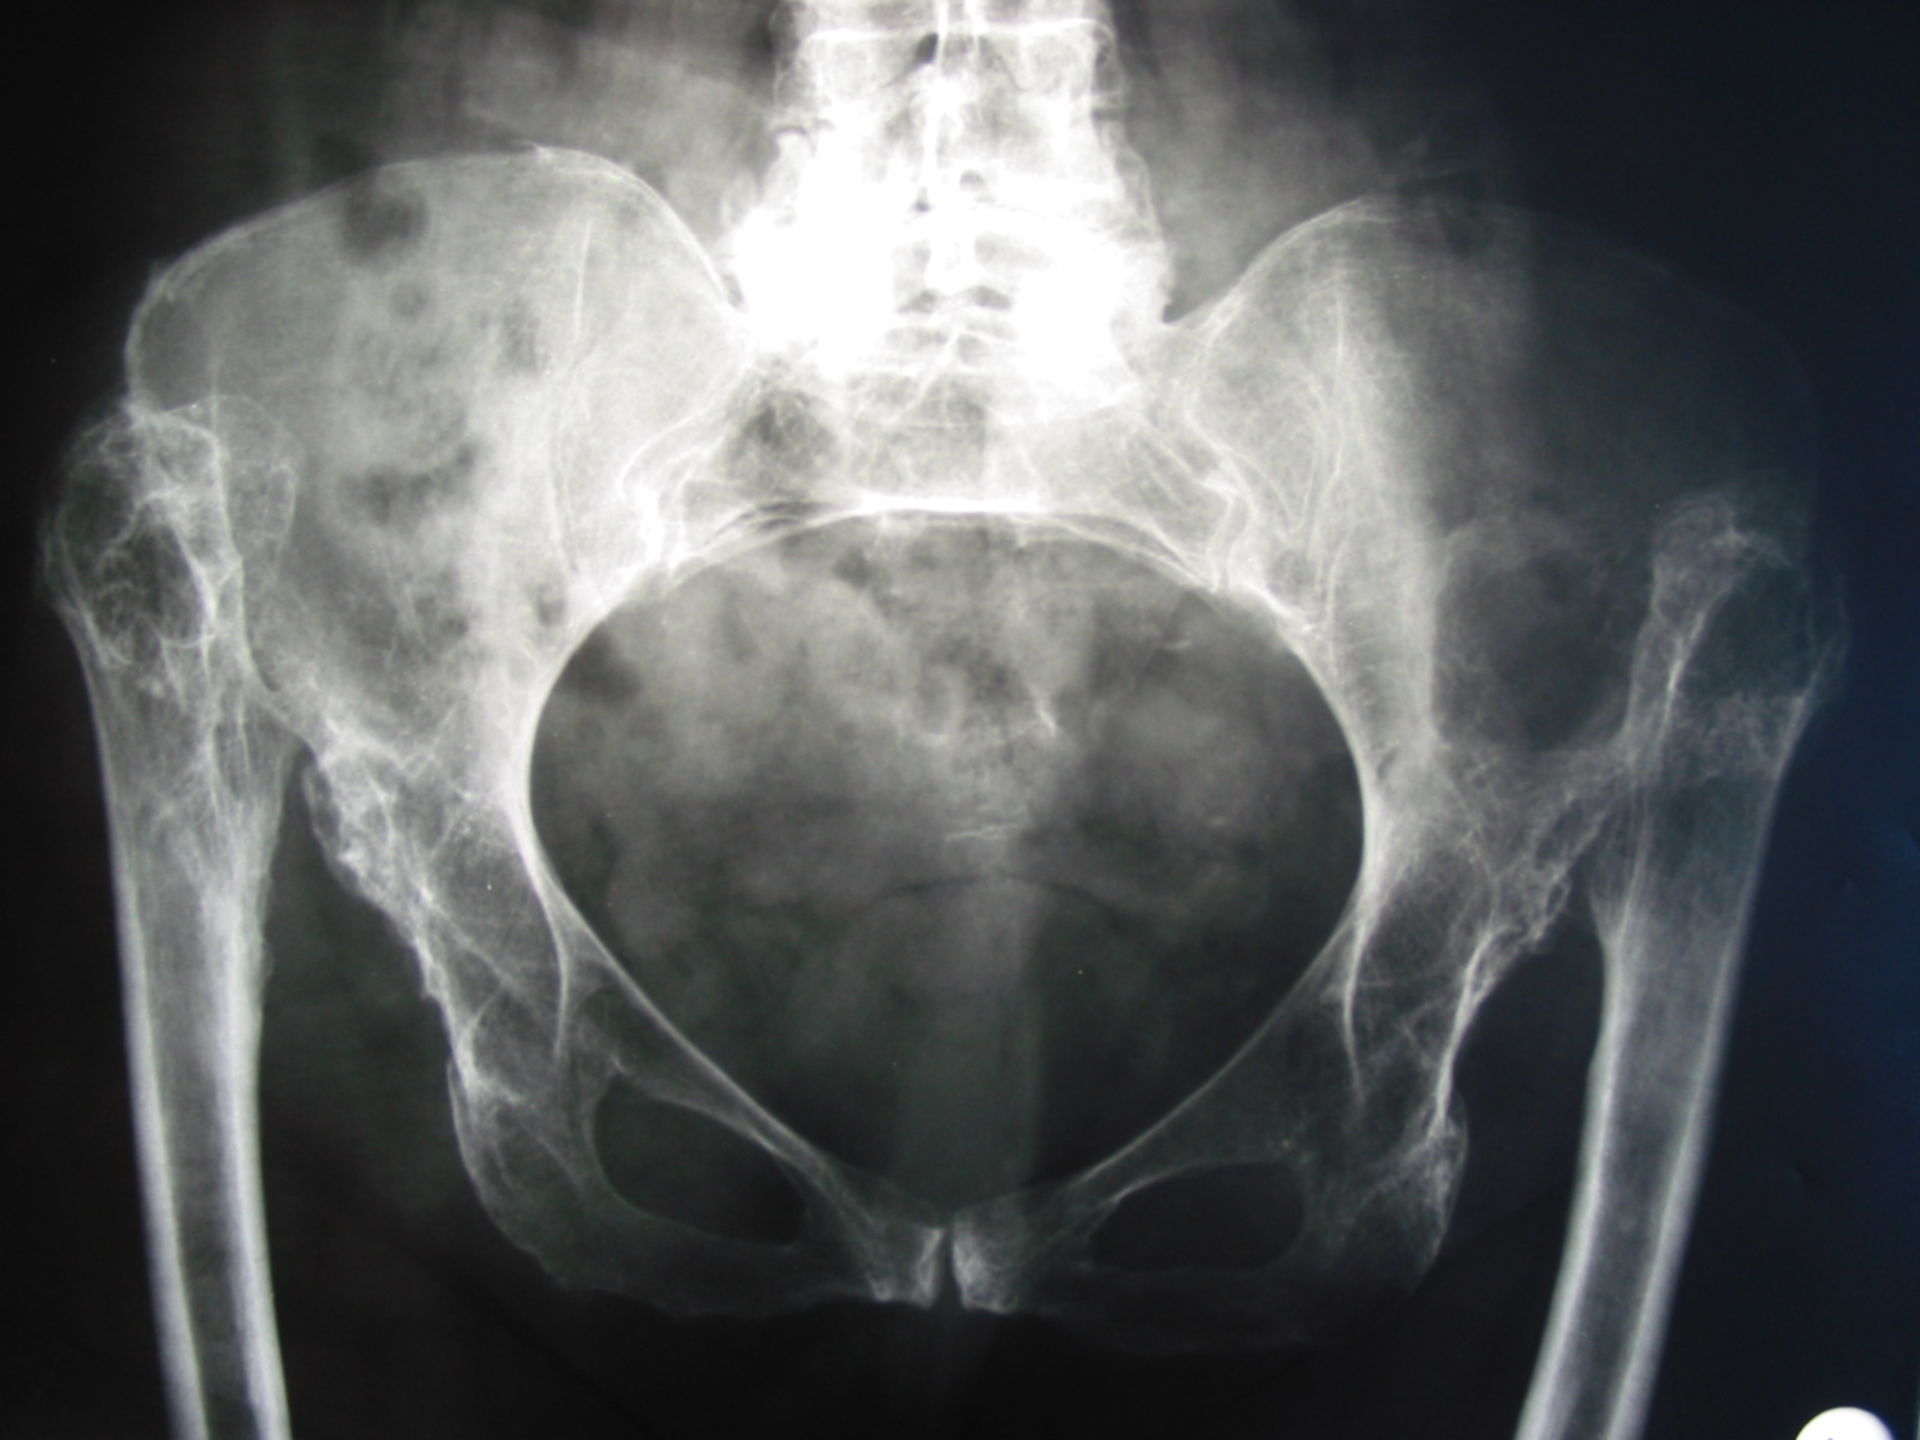 Severe developmental dysplasia of the hip